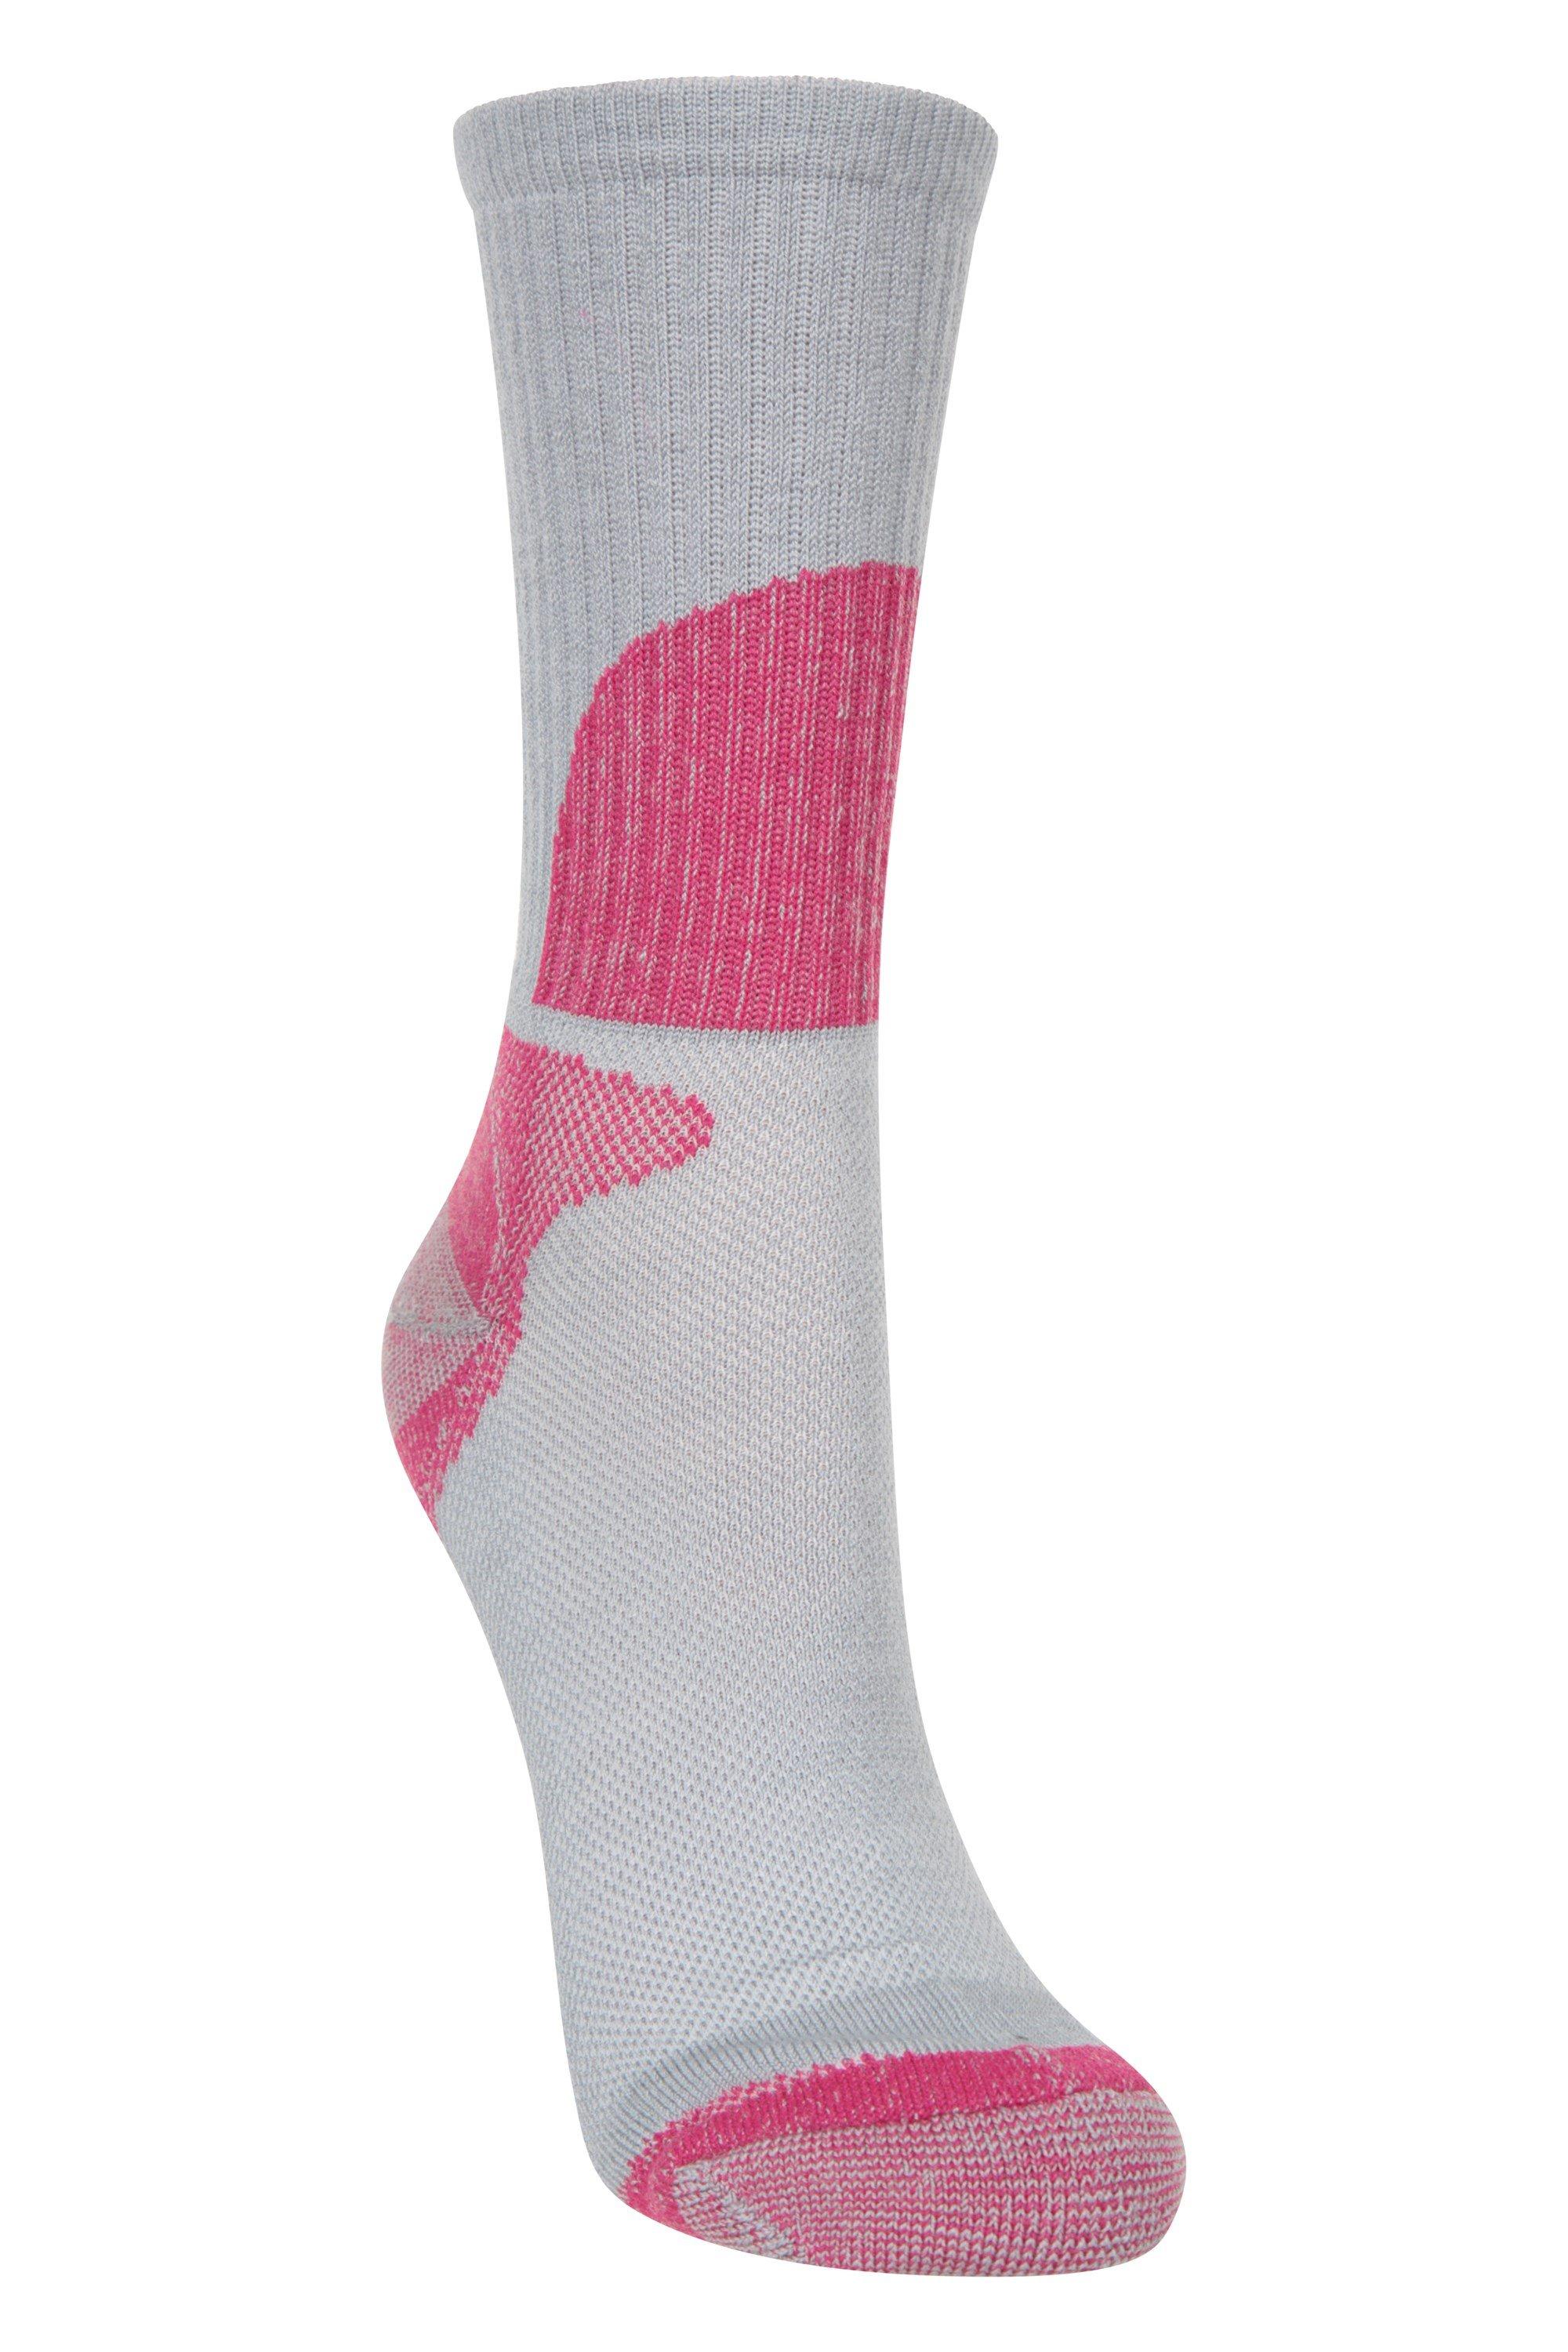 Performance Merino  Socks  Soft Mid Calf Socks